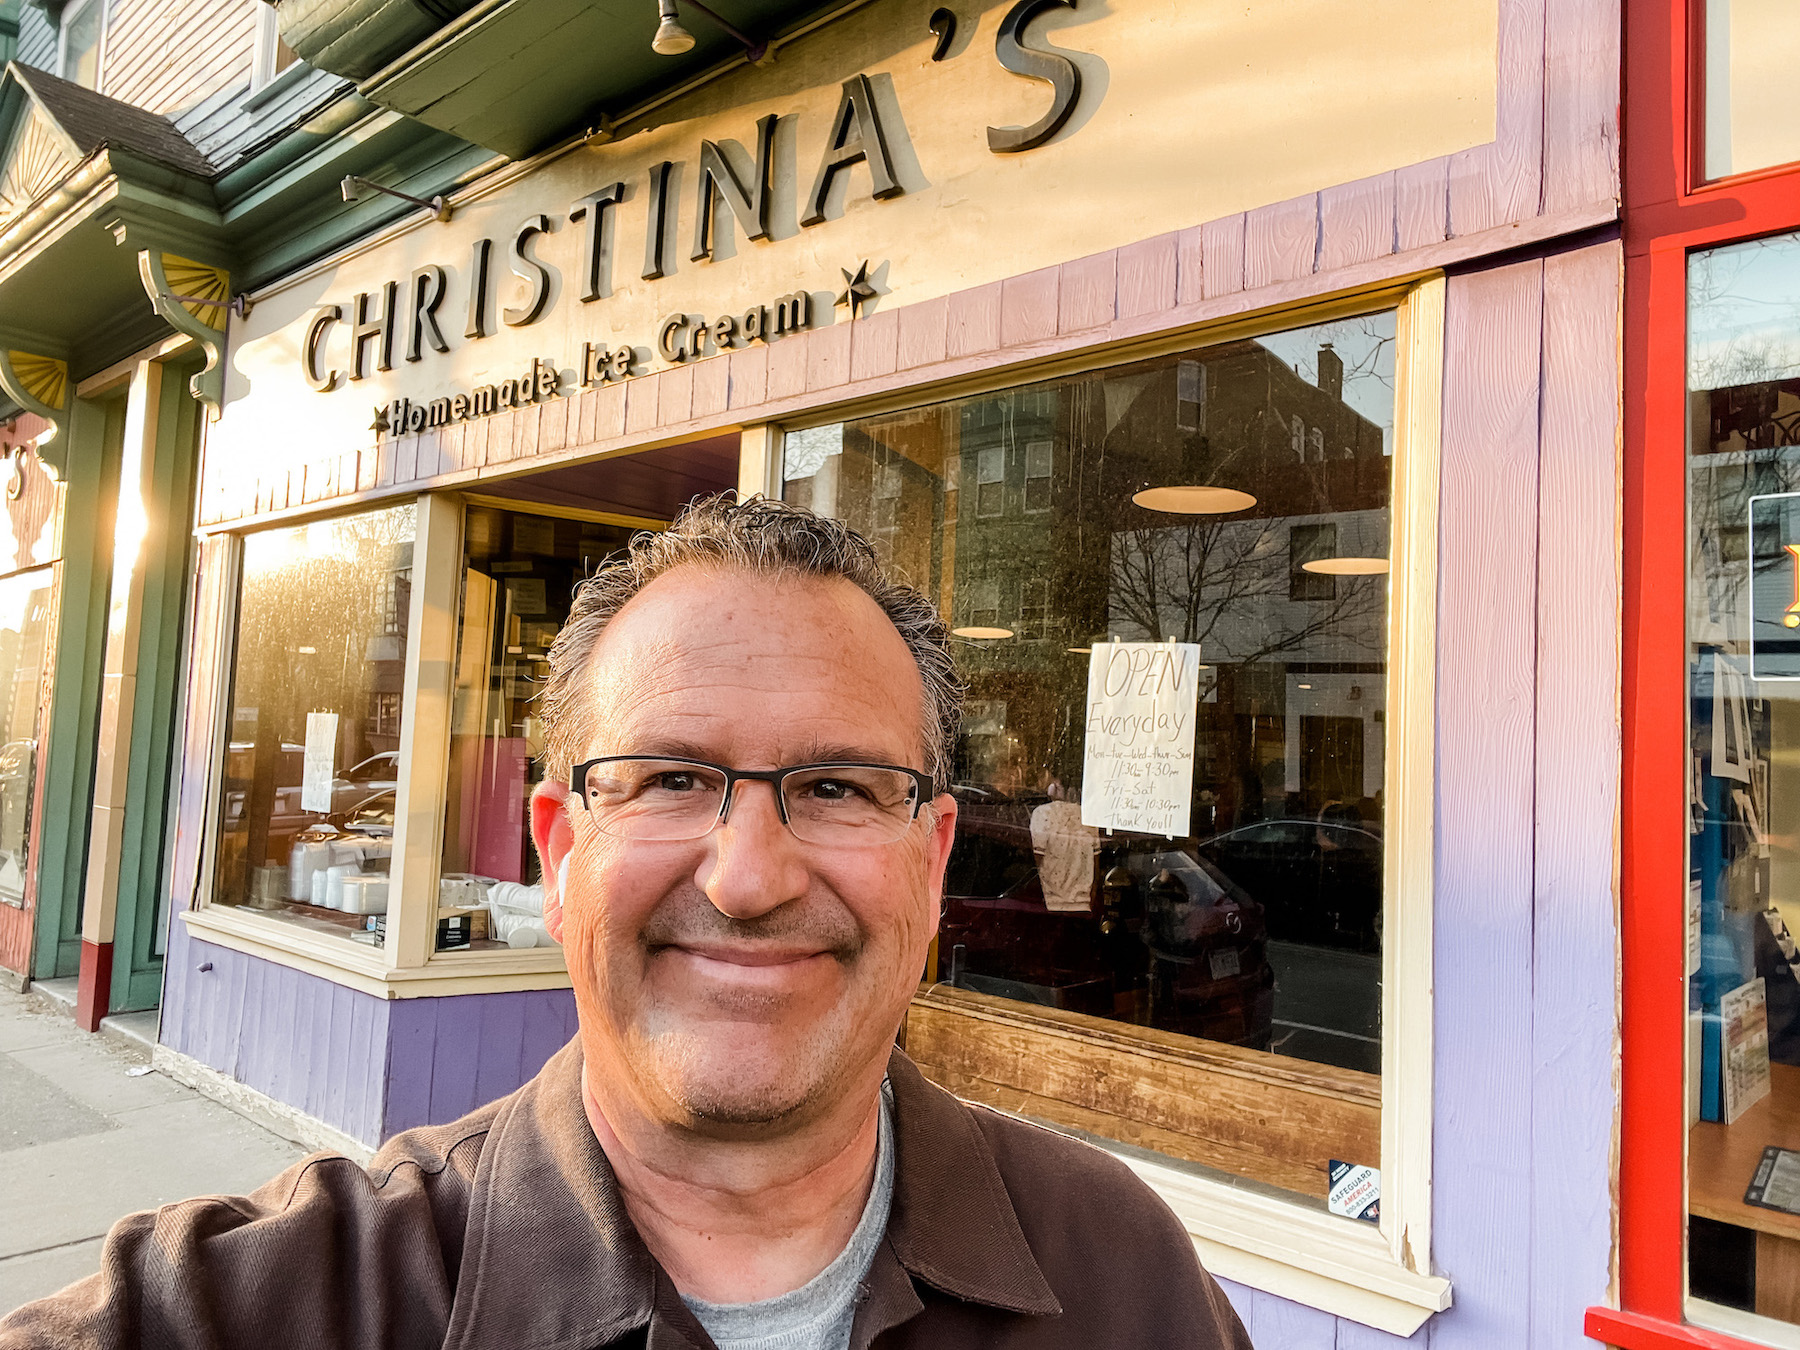 Meet me at Christina's Ice Cream